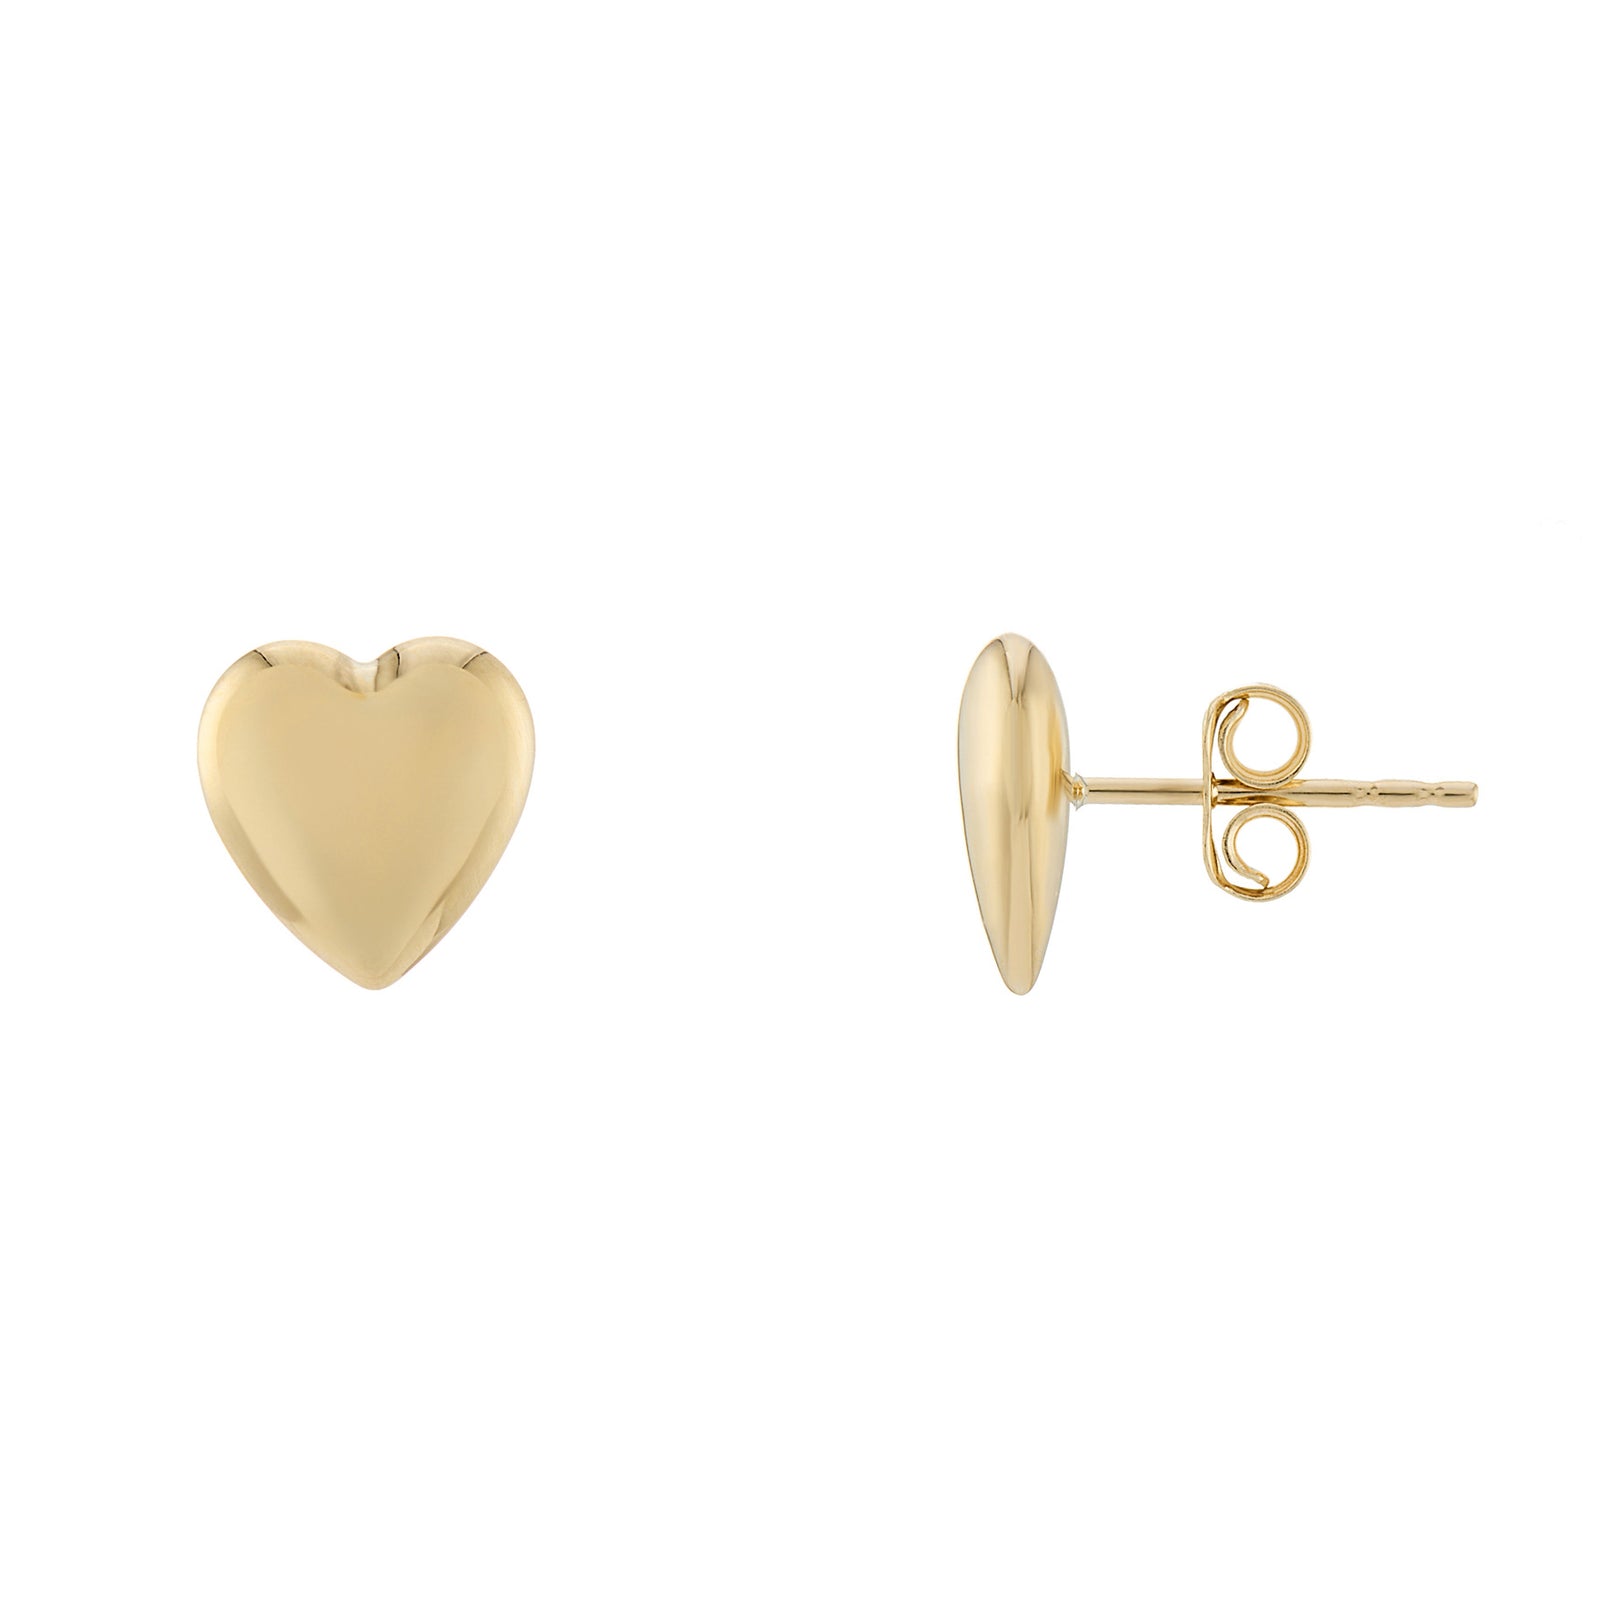 9ct gold 10mm plain heart stud earrings